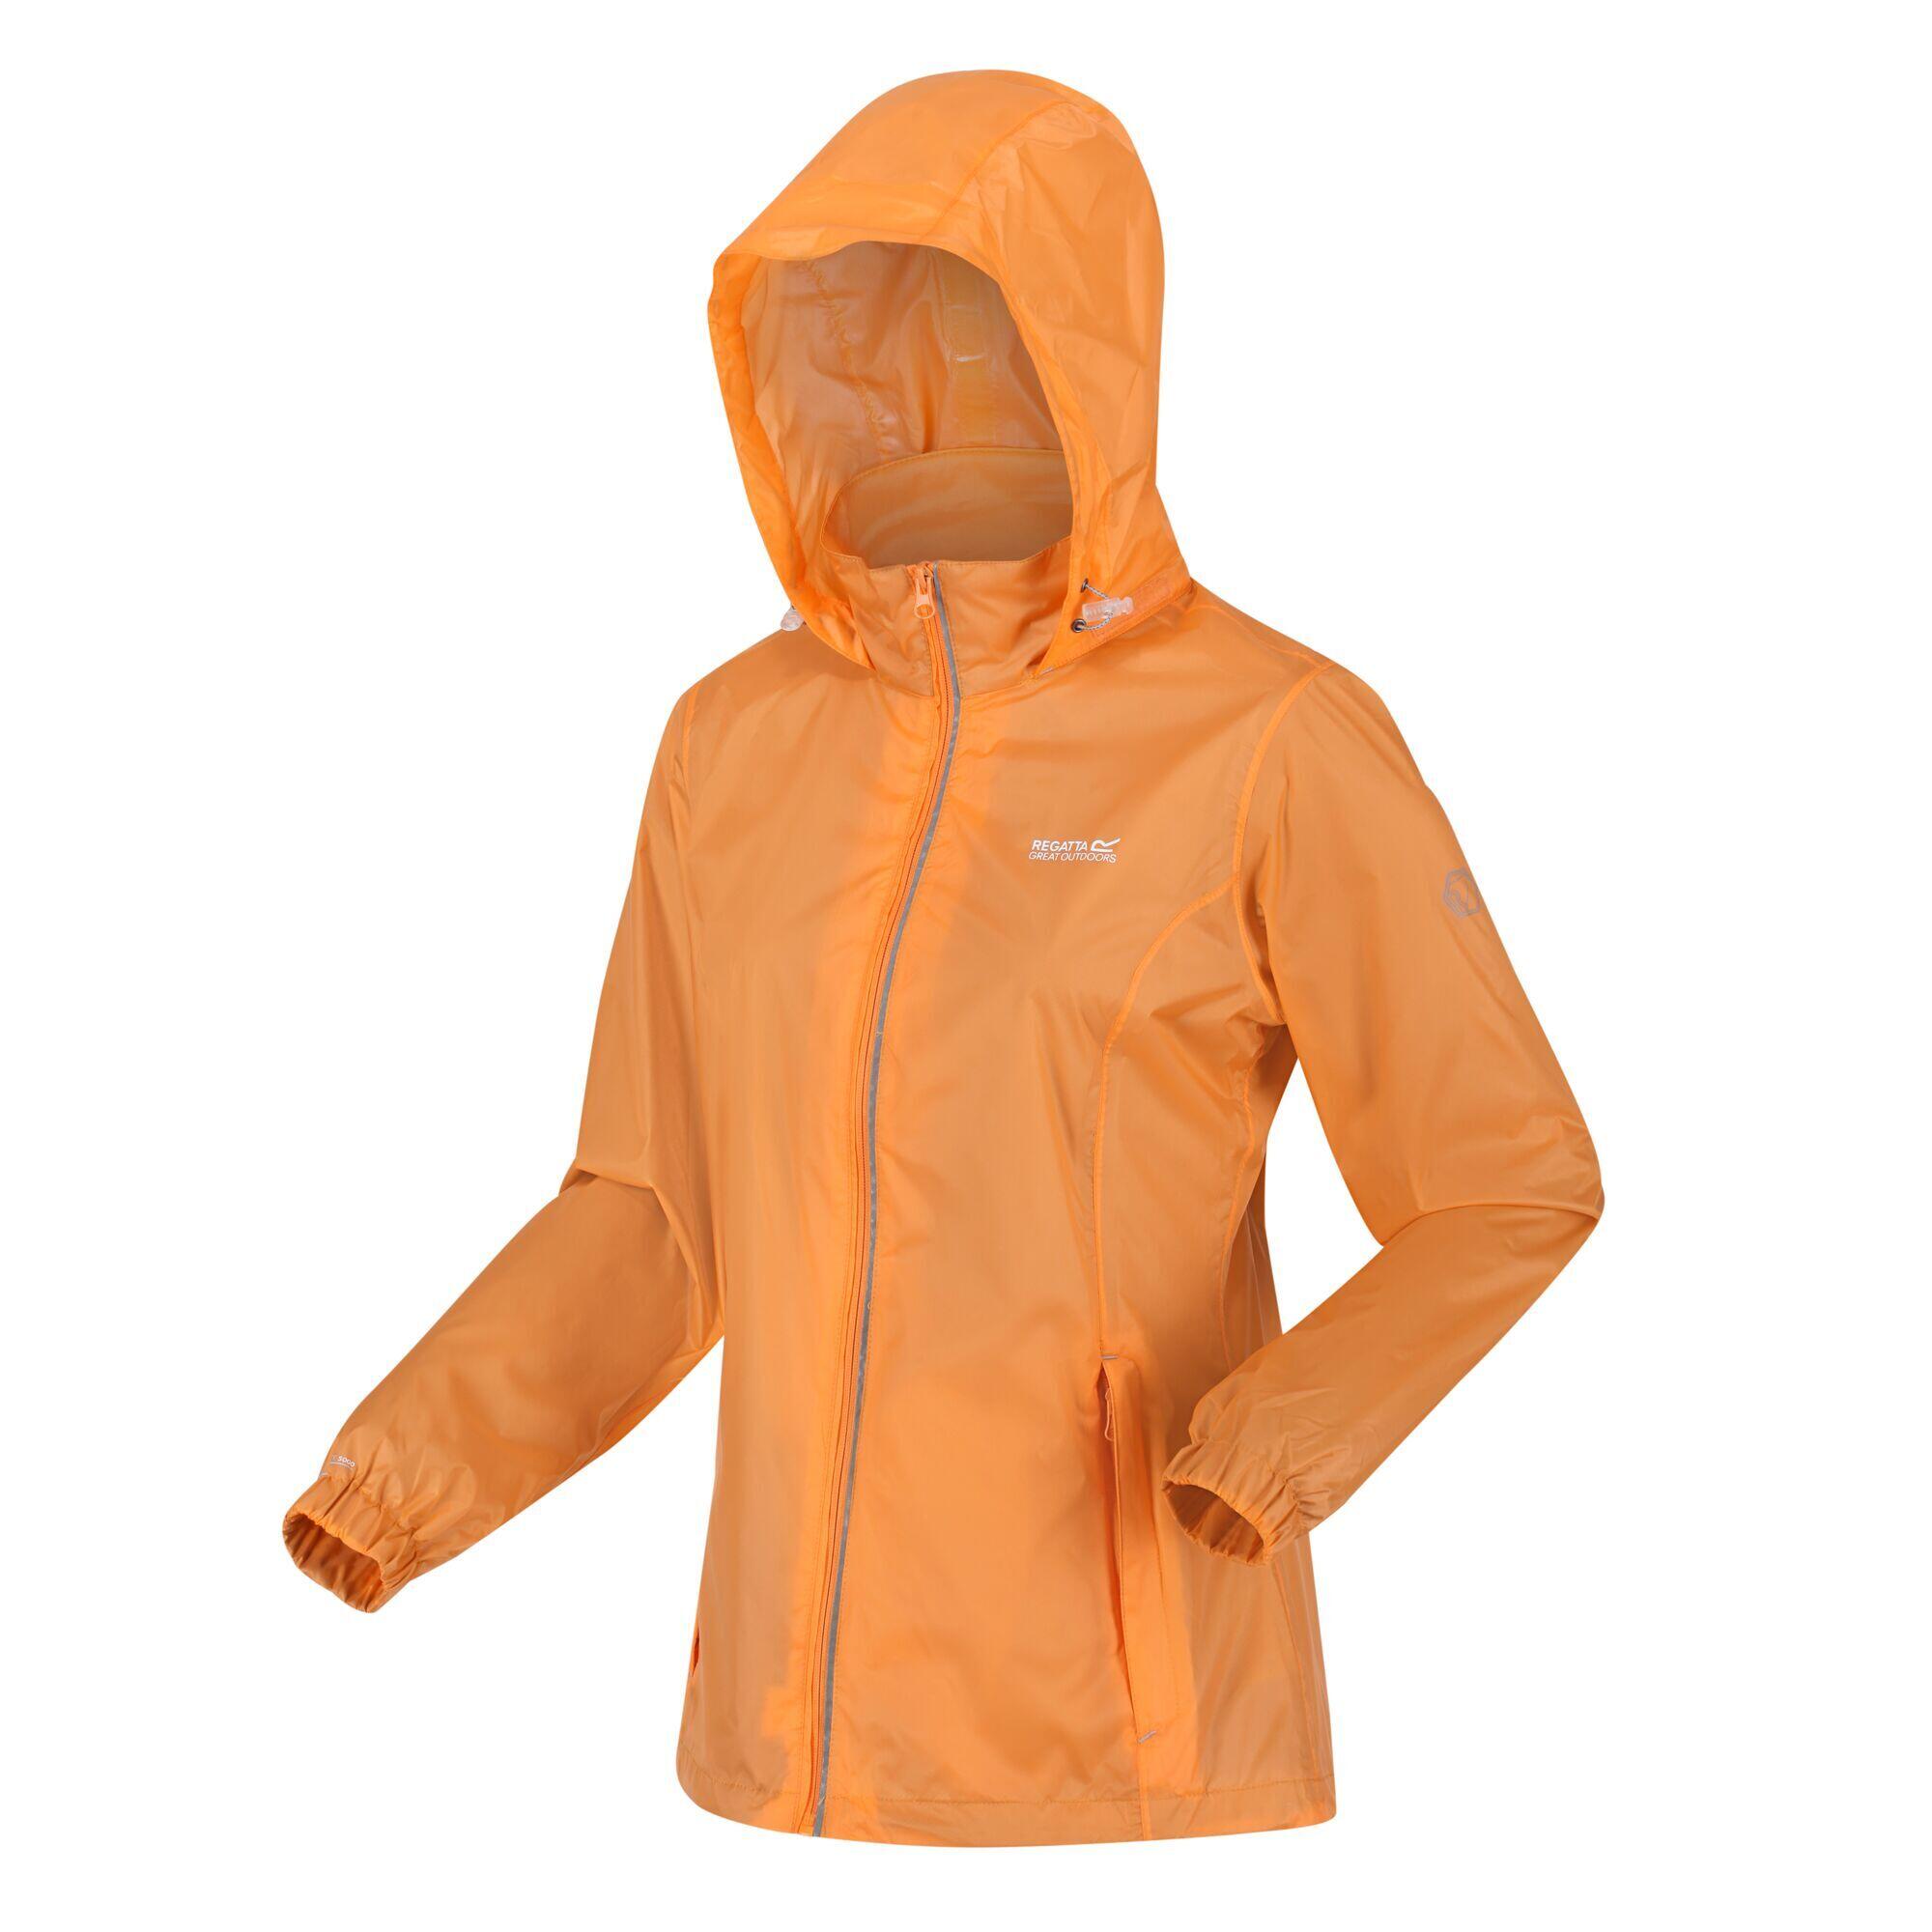 Corinne IV Women's Fitness Waterproof Rain Jacket - Light Orange 5/7